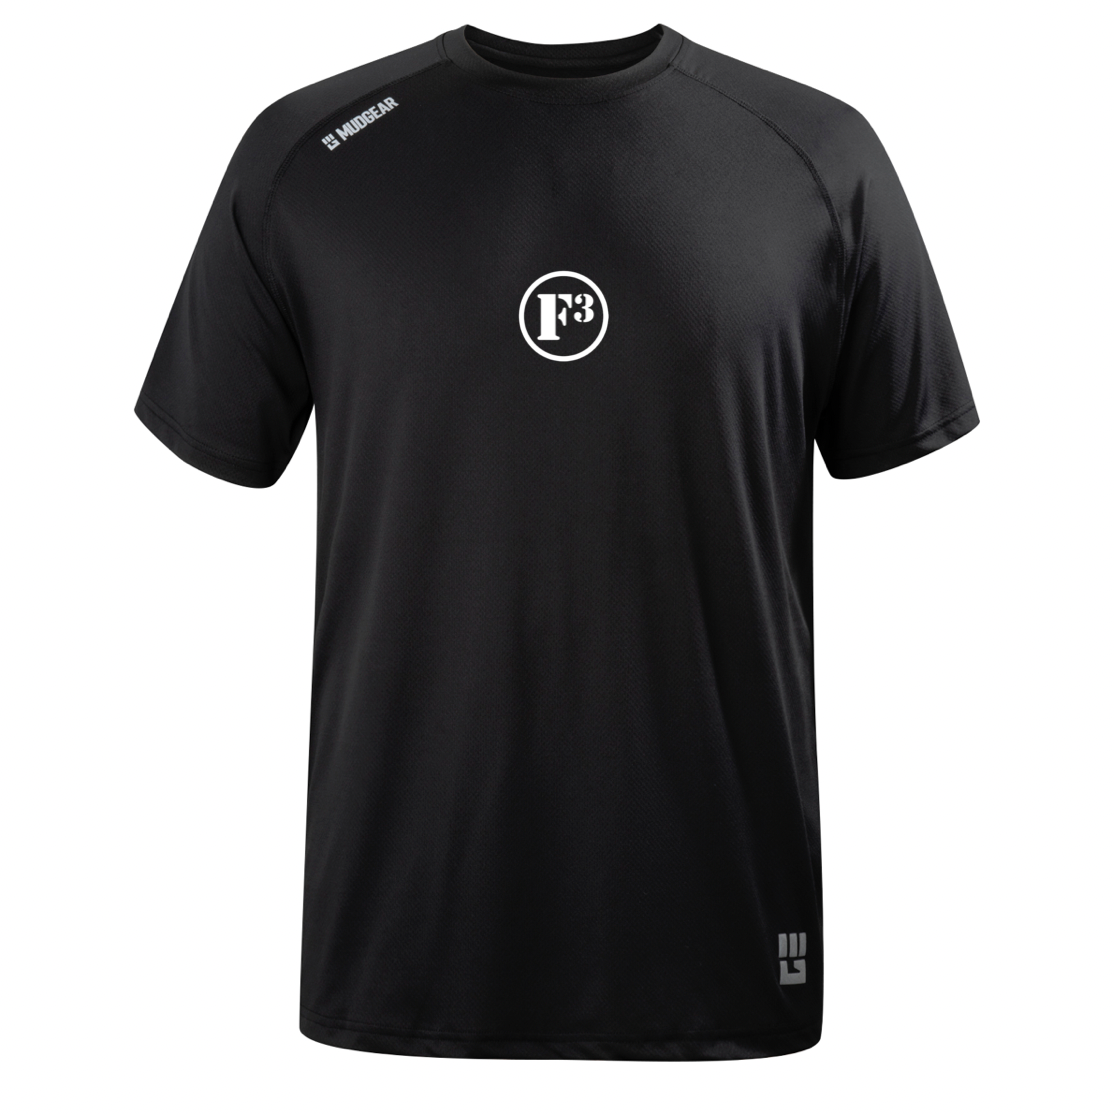 F3 Classic - MudGear Loose Fit Performance Shirt VX - Short Sleeve (Black)